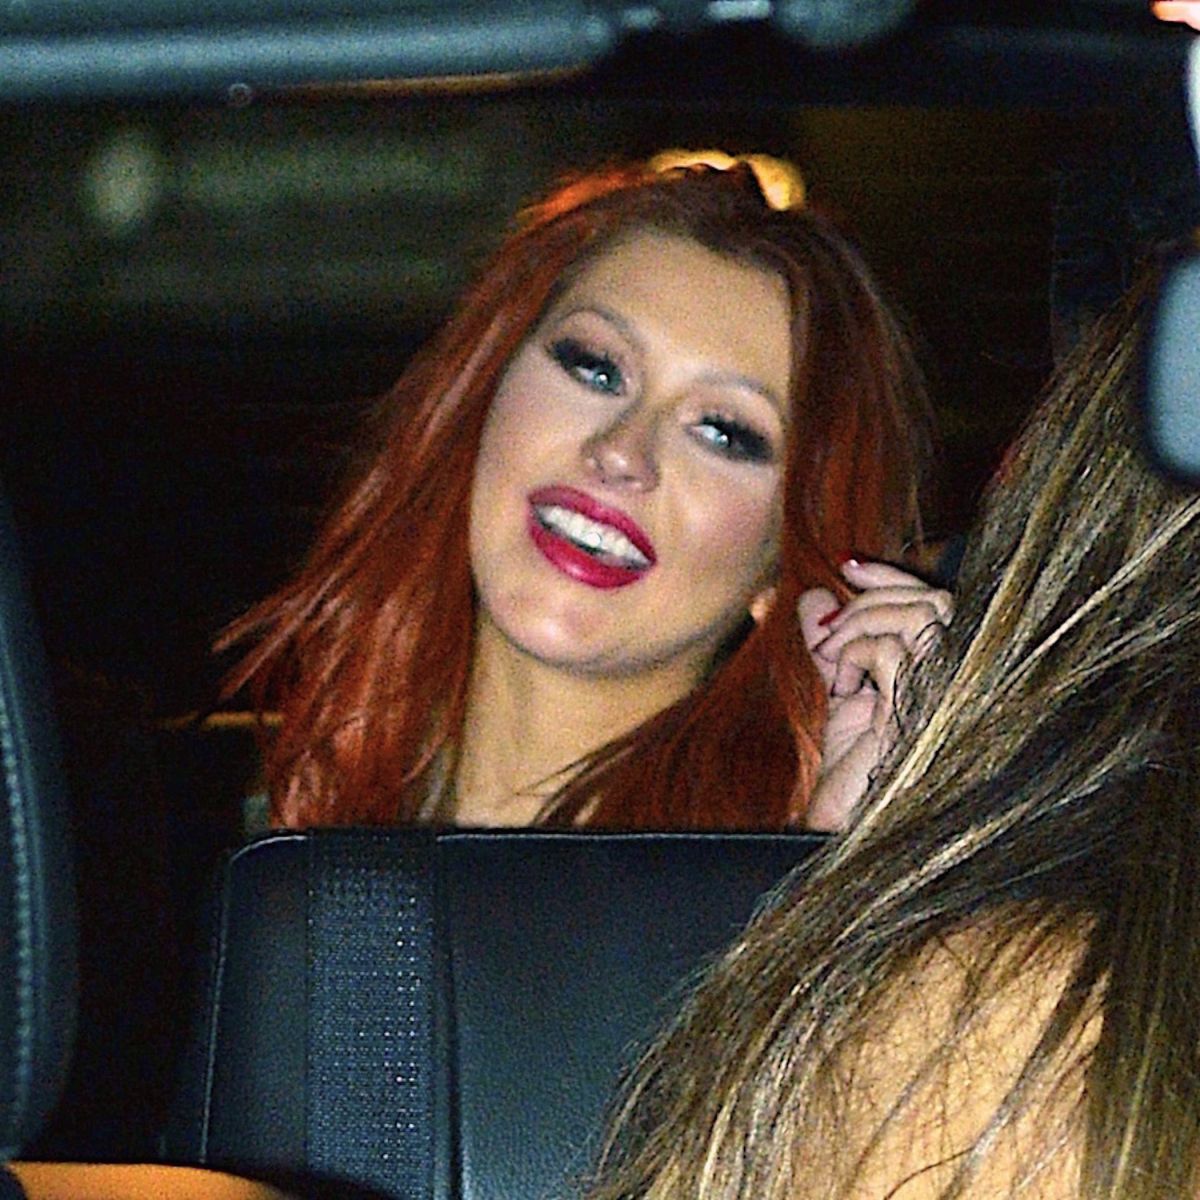 Christina Aguilera Leaves Night Club New York